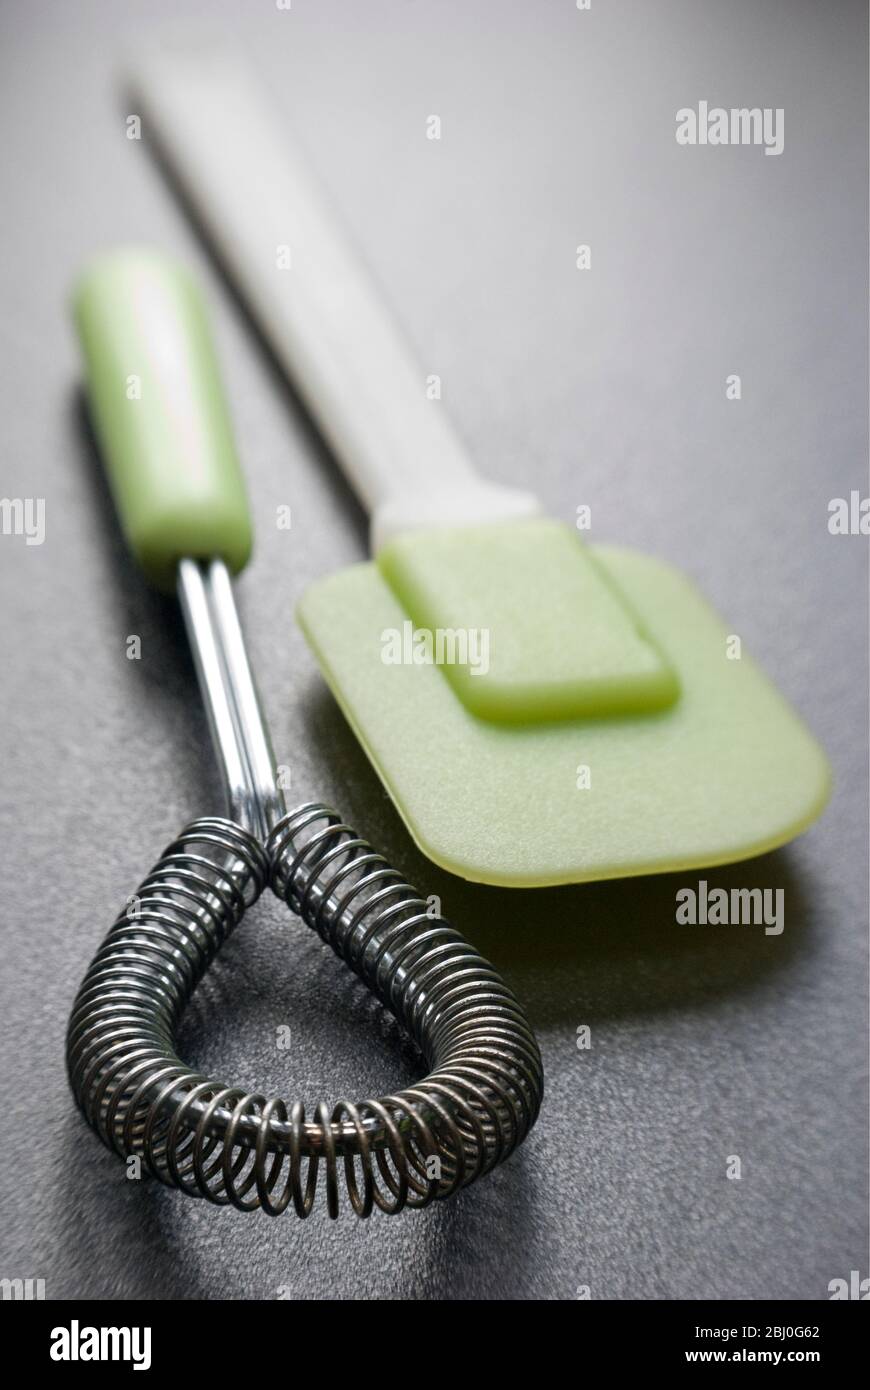 Kochgeräte, Drahtbesen und grüner Kunststoff- und Silikonspachtel - Stockfoto